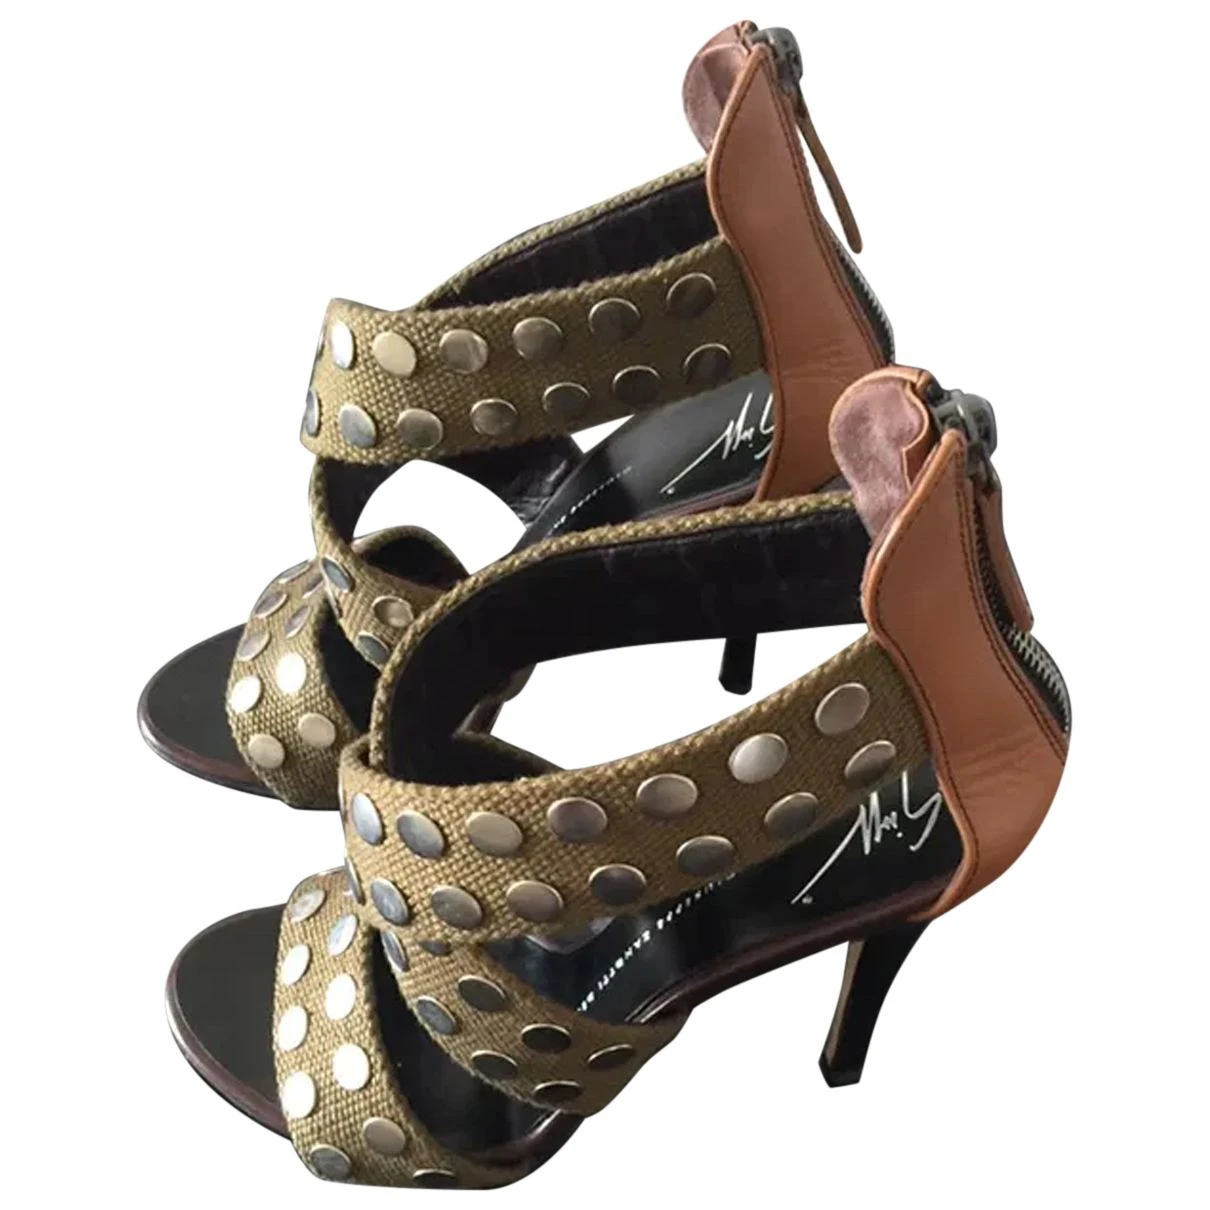 shoes Giuseppe Zanotti sandals for Female Leather 38.5 EU. Used condition